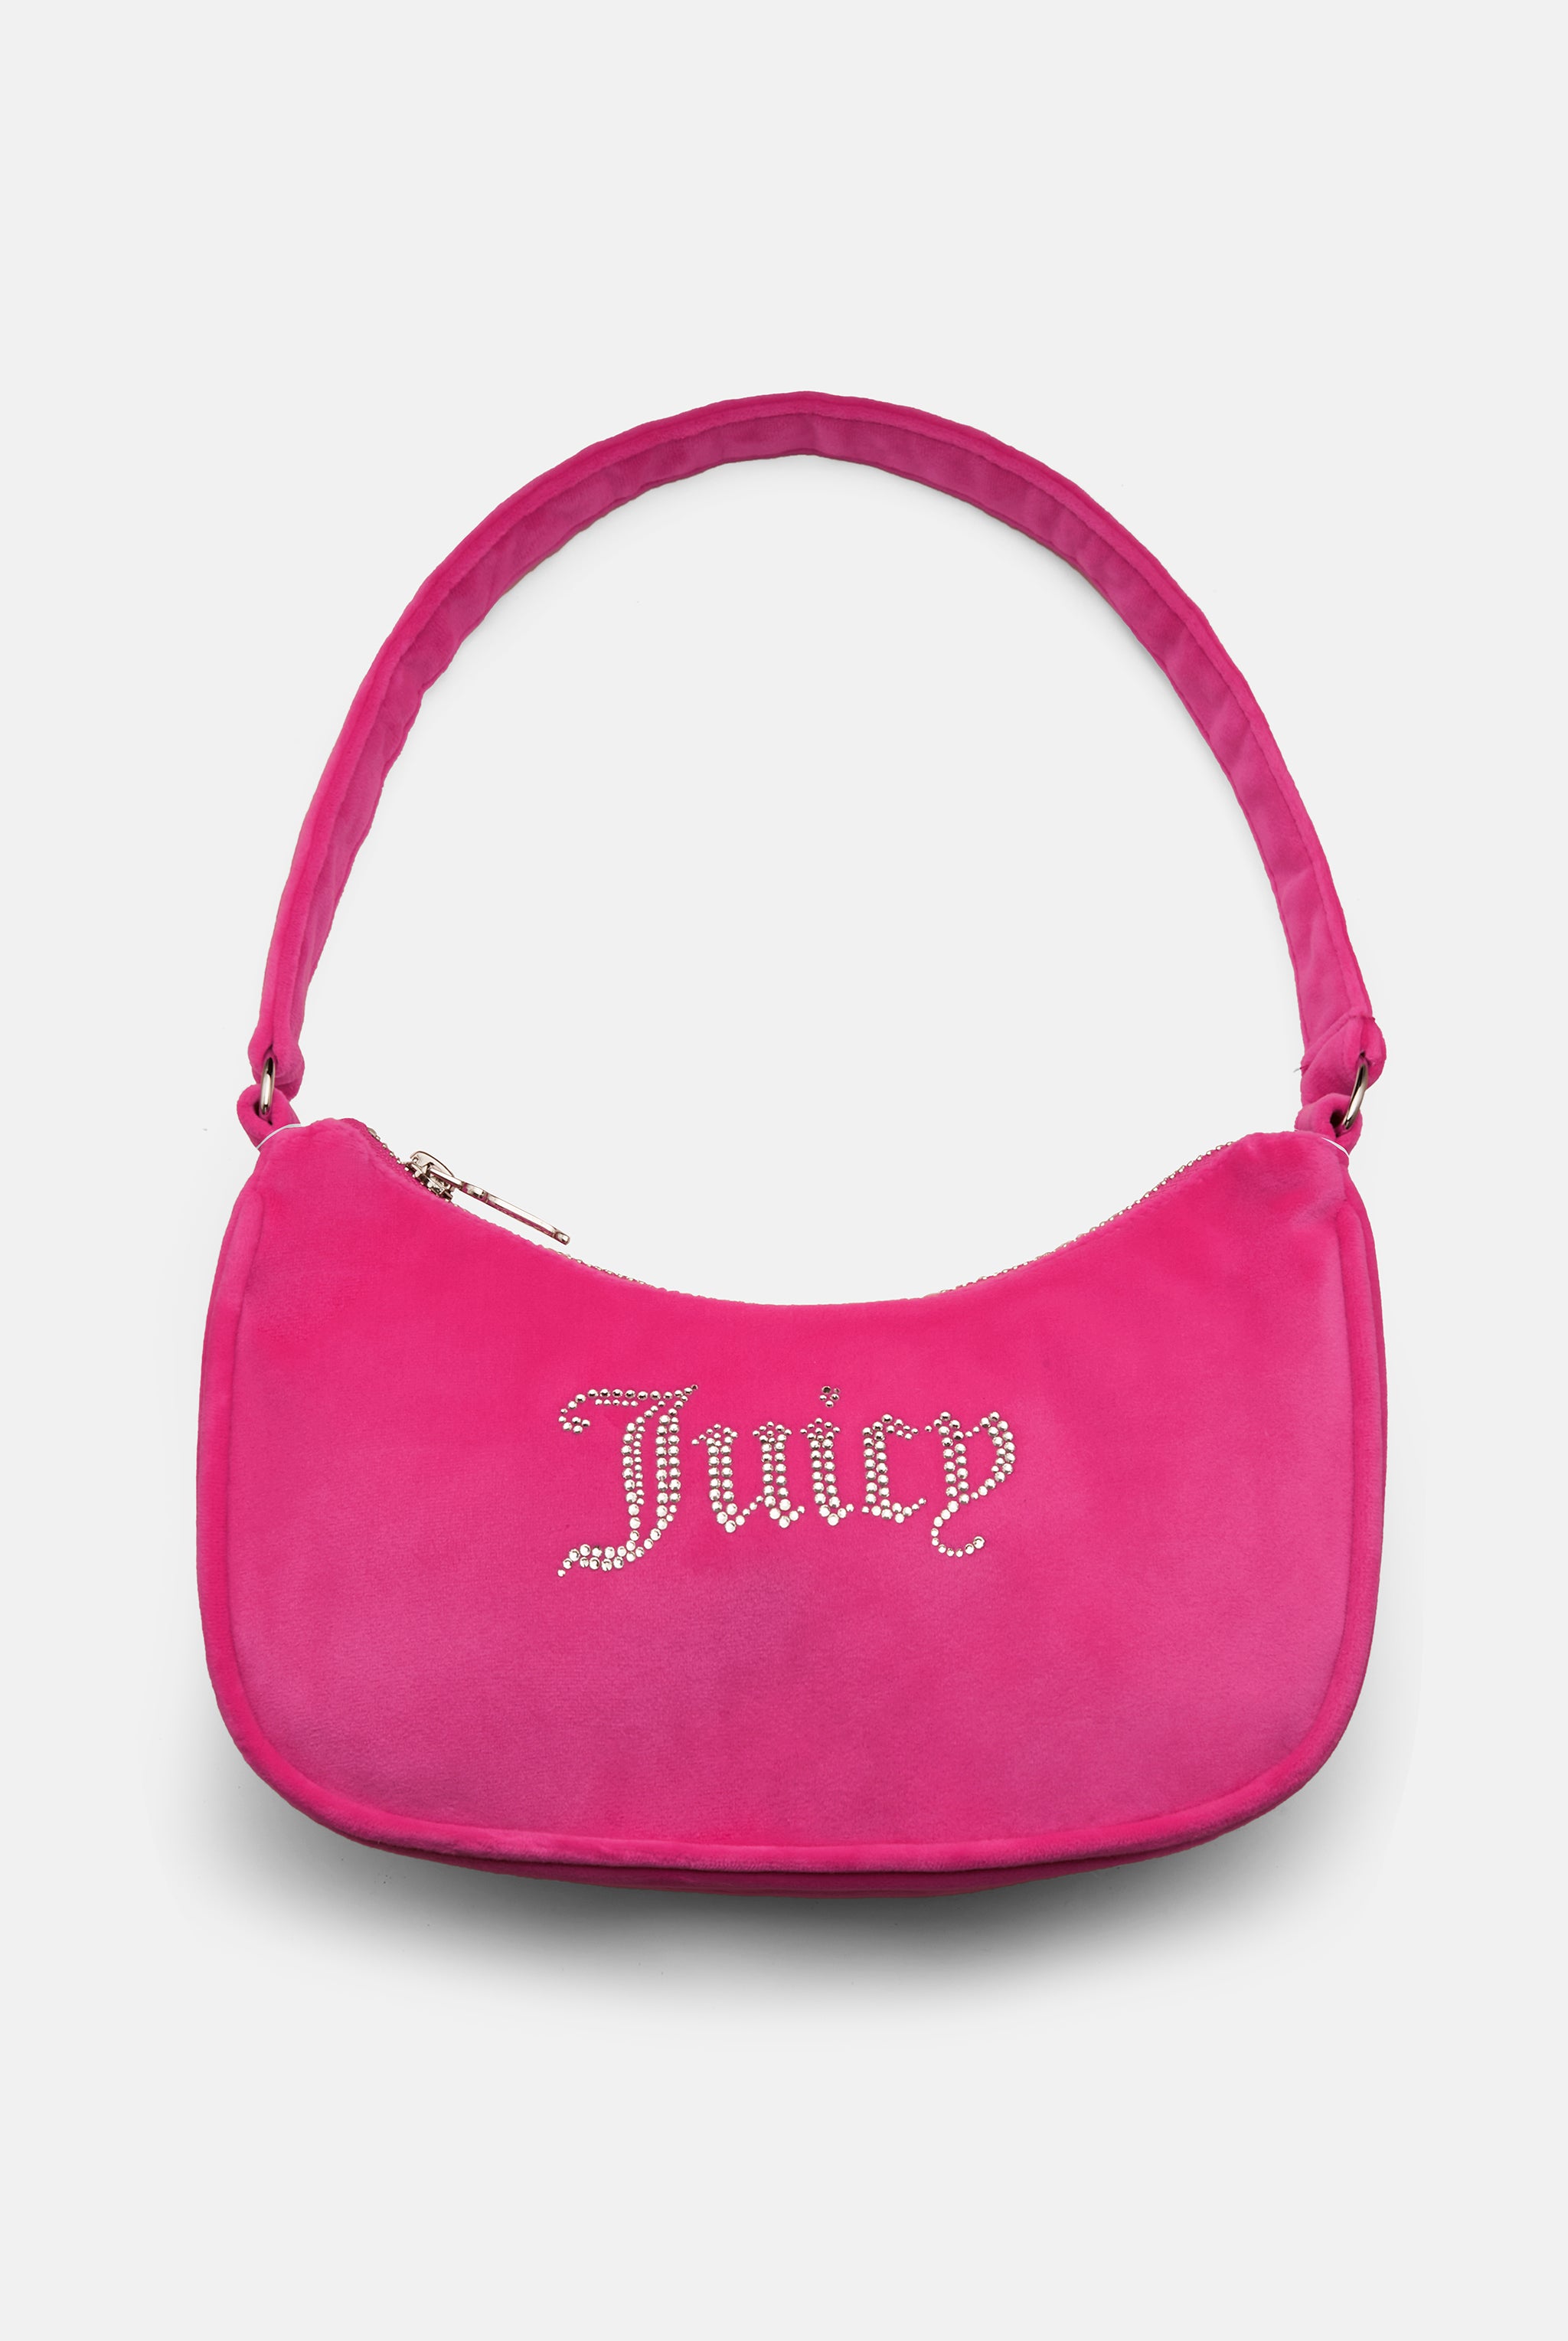 VINTAGE RARE JUICY Couture Velour Velvet Messenger Bag With Pink Tag  £235.55 - PicClick UK